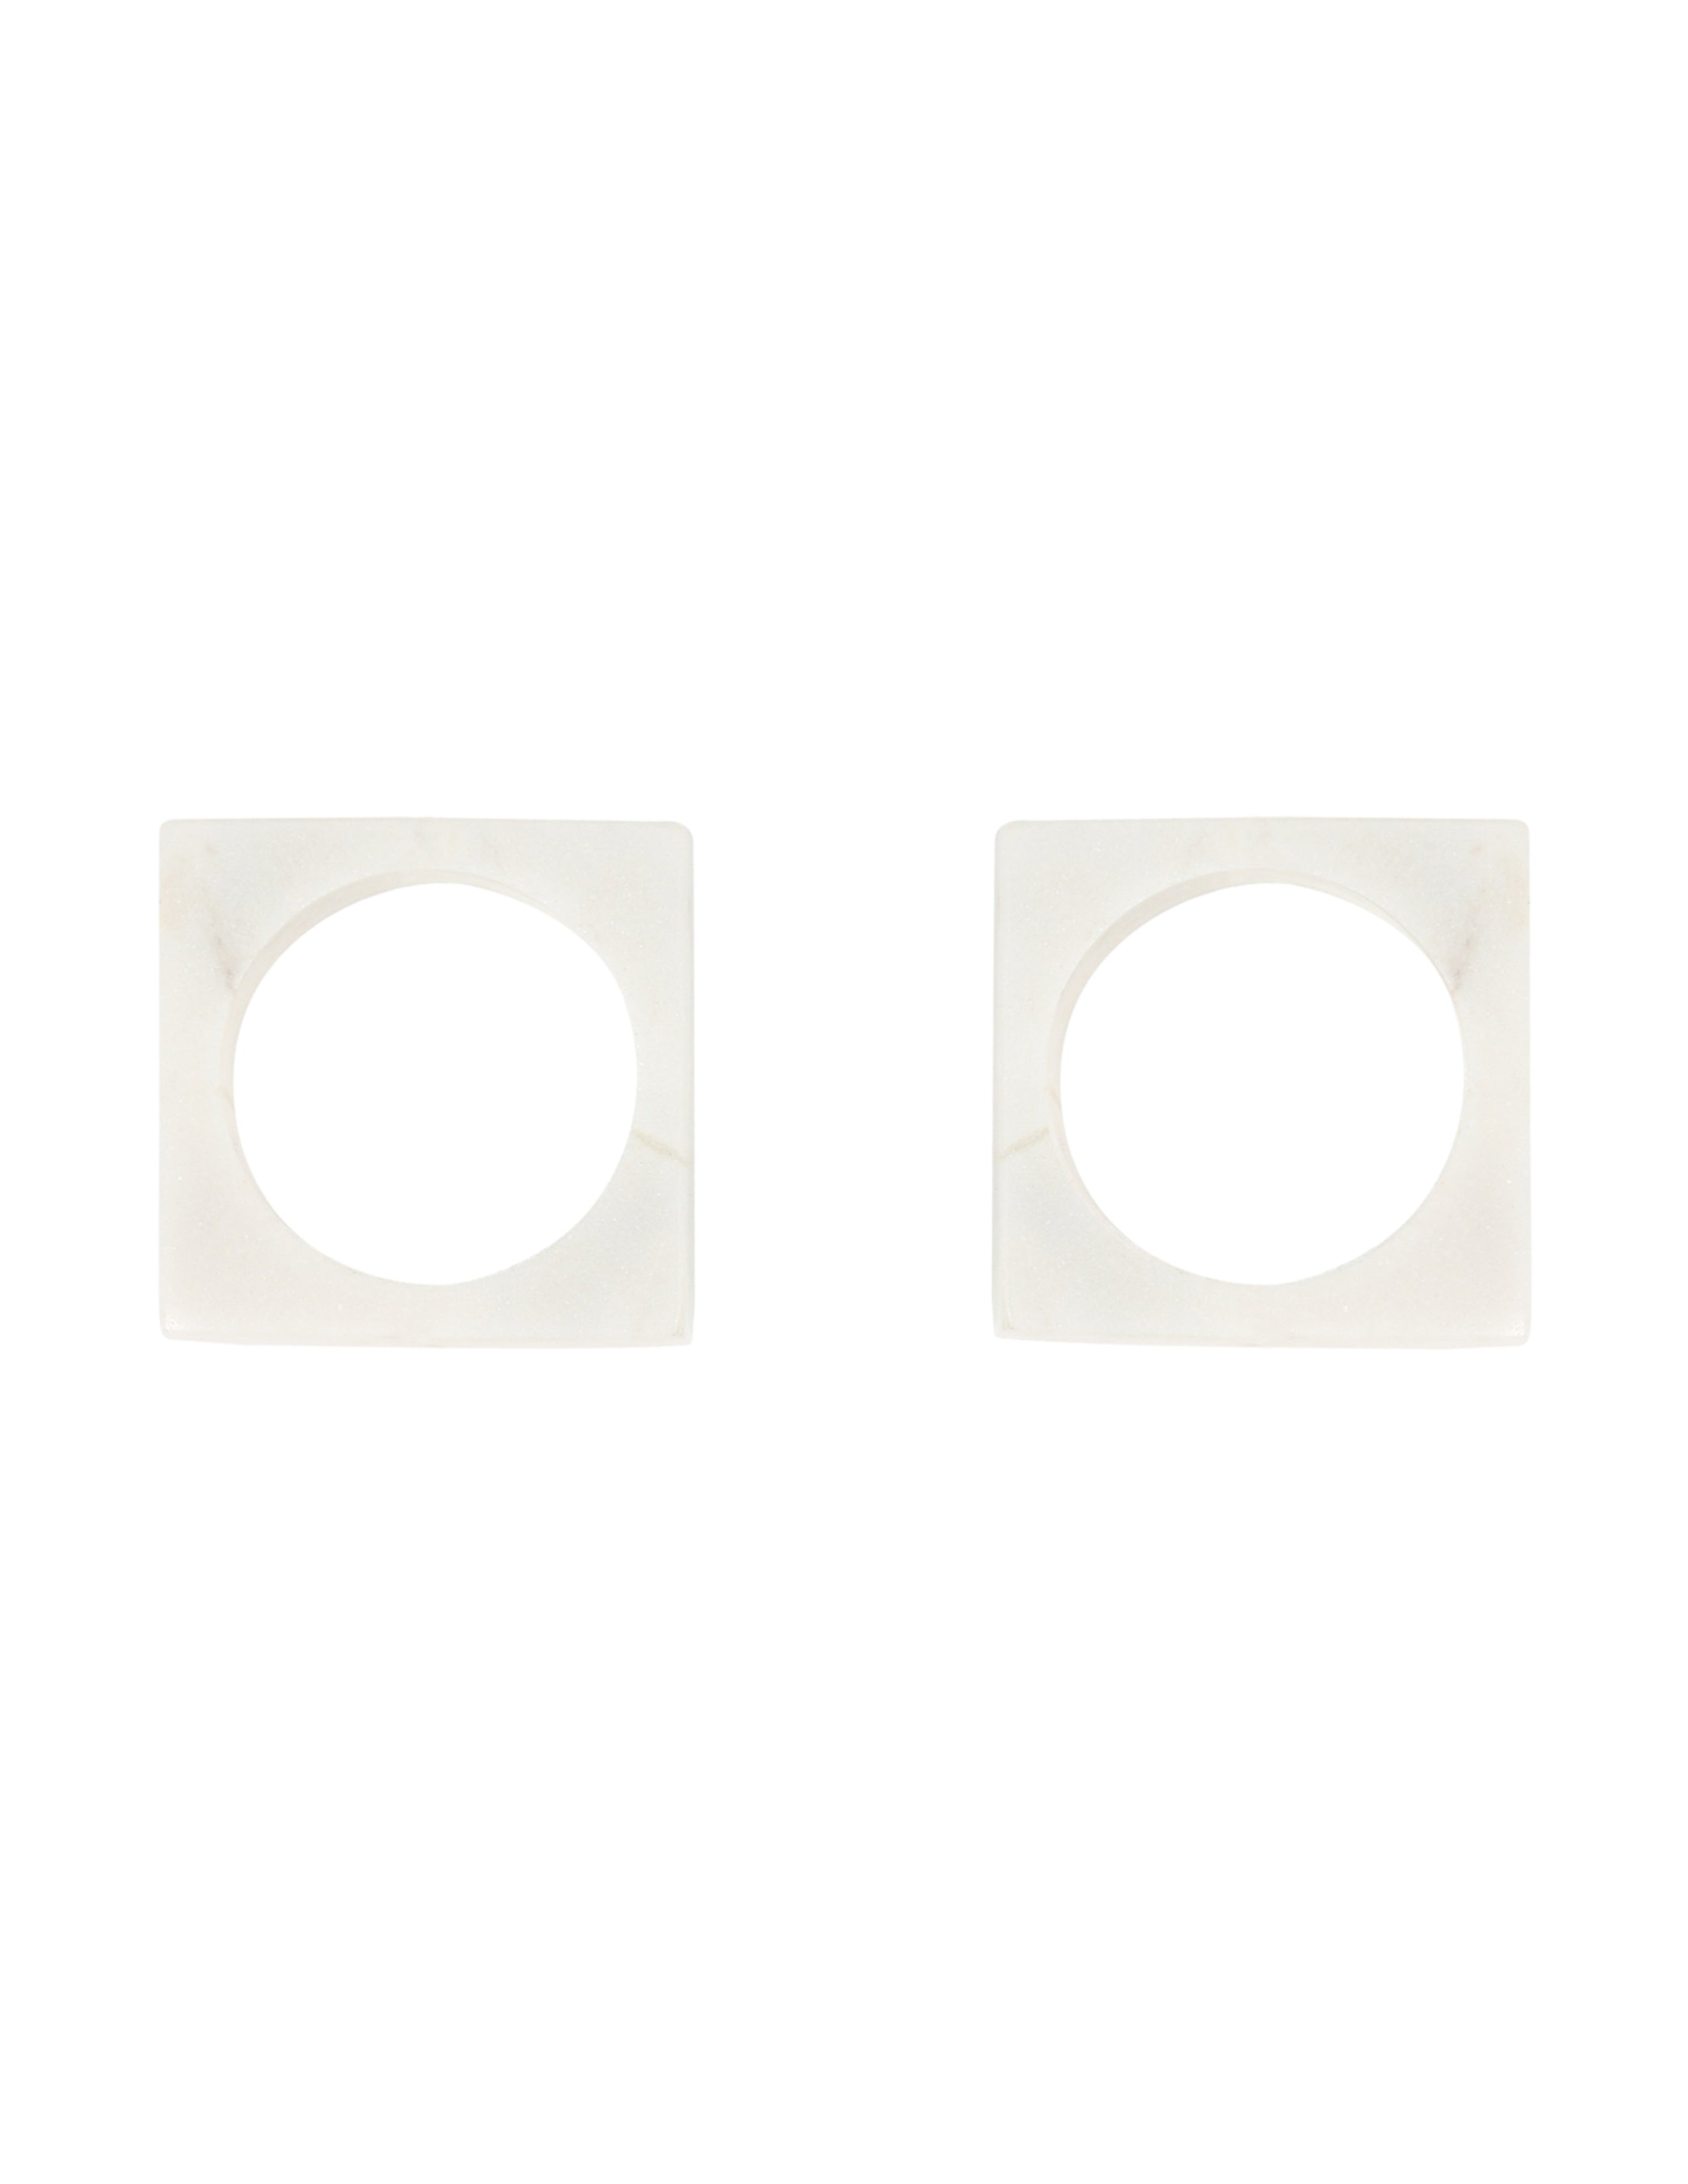 Marble Napkin Ring Set of 2 - White